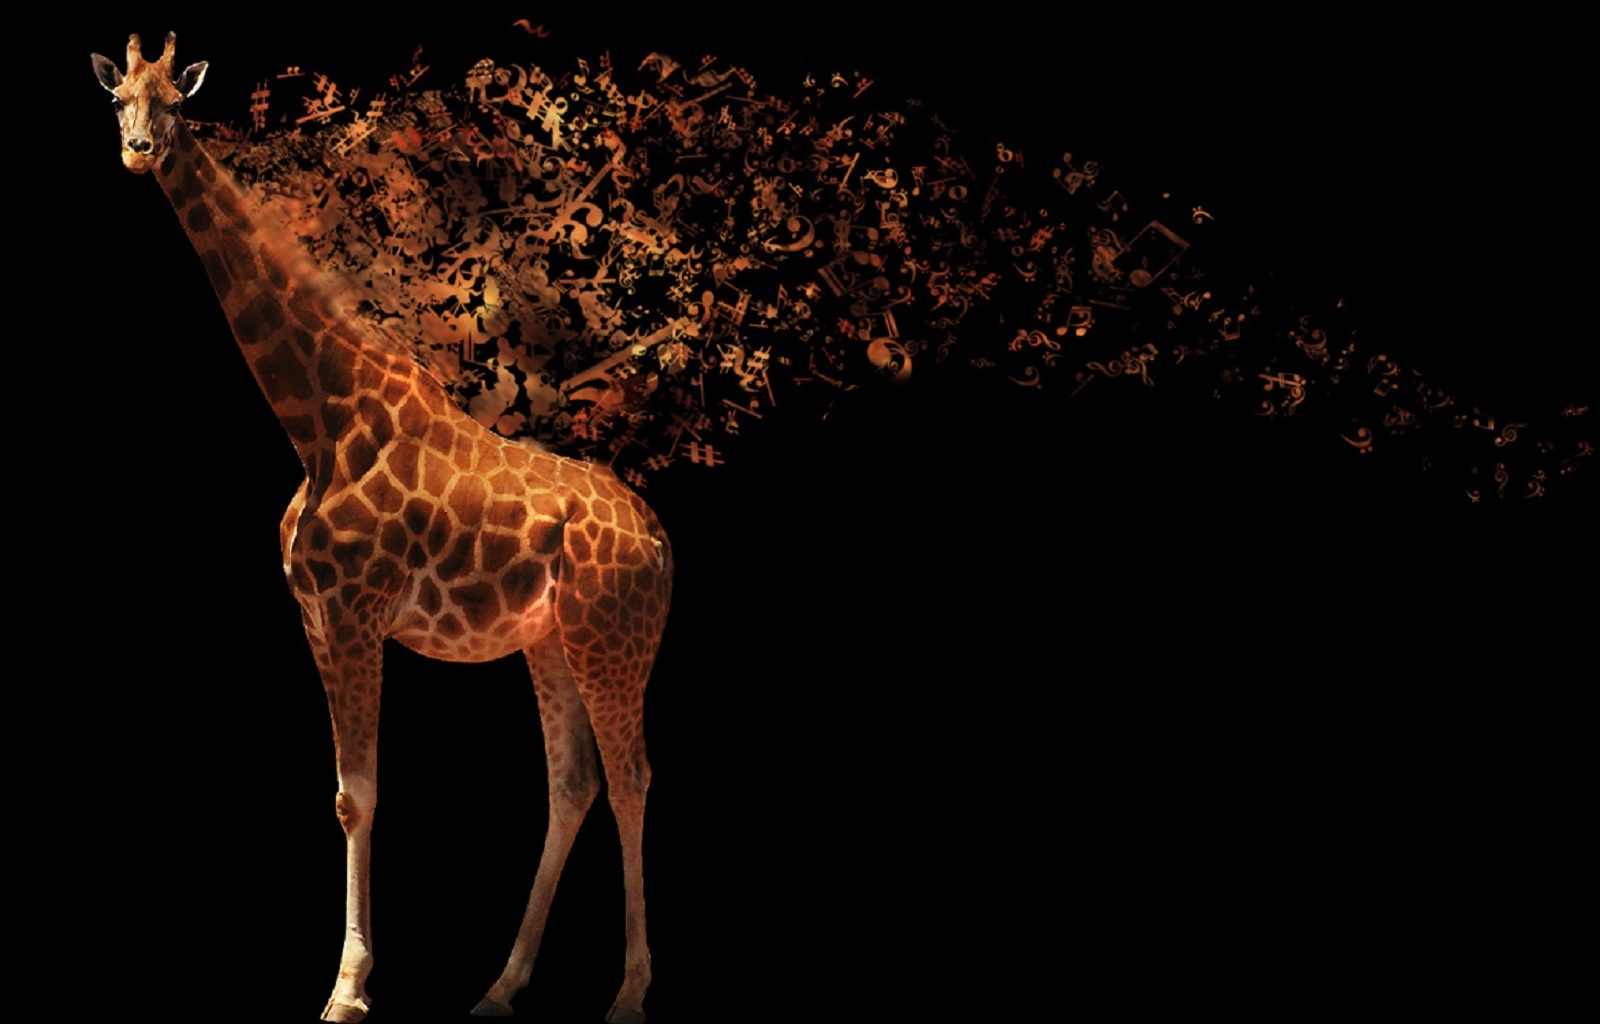 giraffes, animals, background, art photo, black